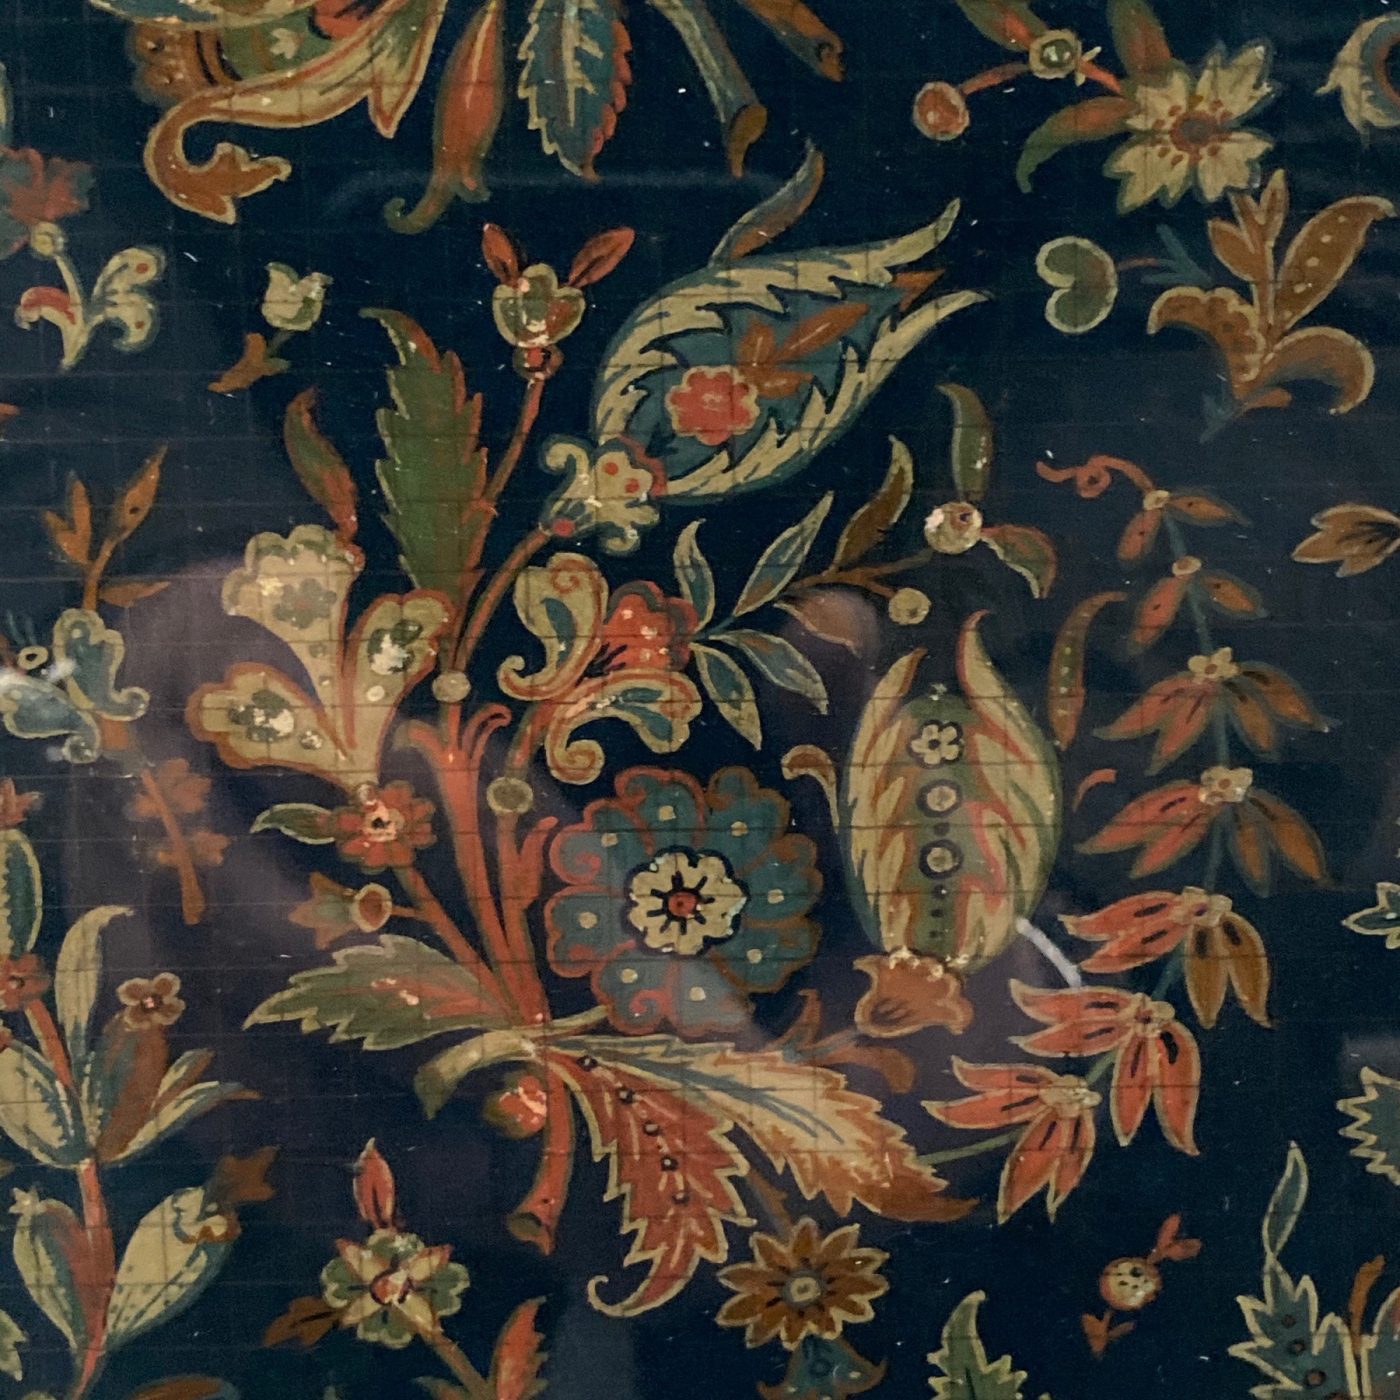 handpainted-textile-pattern0001